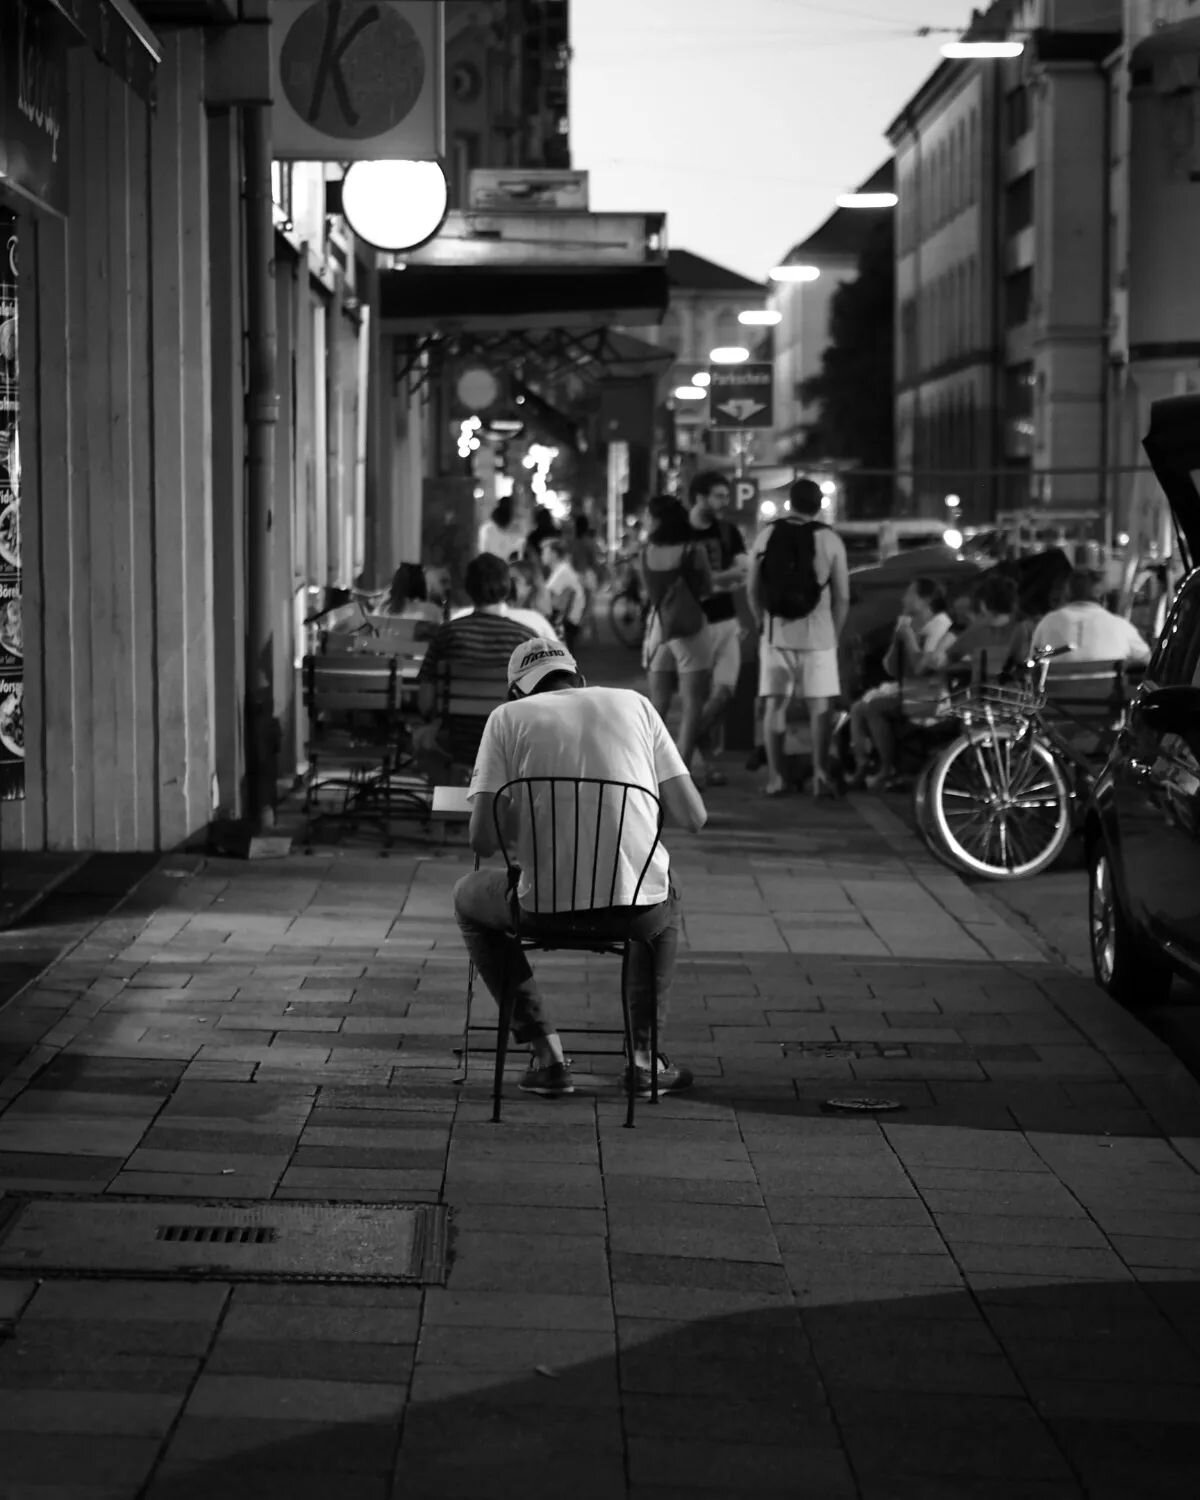 One man, one table 

T&uuml;rkenstrasse/ Munich '22

#_streetstock #cinema_streets #streetxstory #streetmoment #streetphotographyinternational #streetcollective #streetphotography #soulofstreet #olympusphotography #mft #streetframe #streetgrammer #st